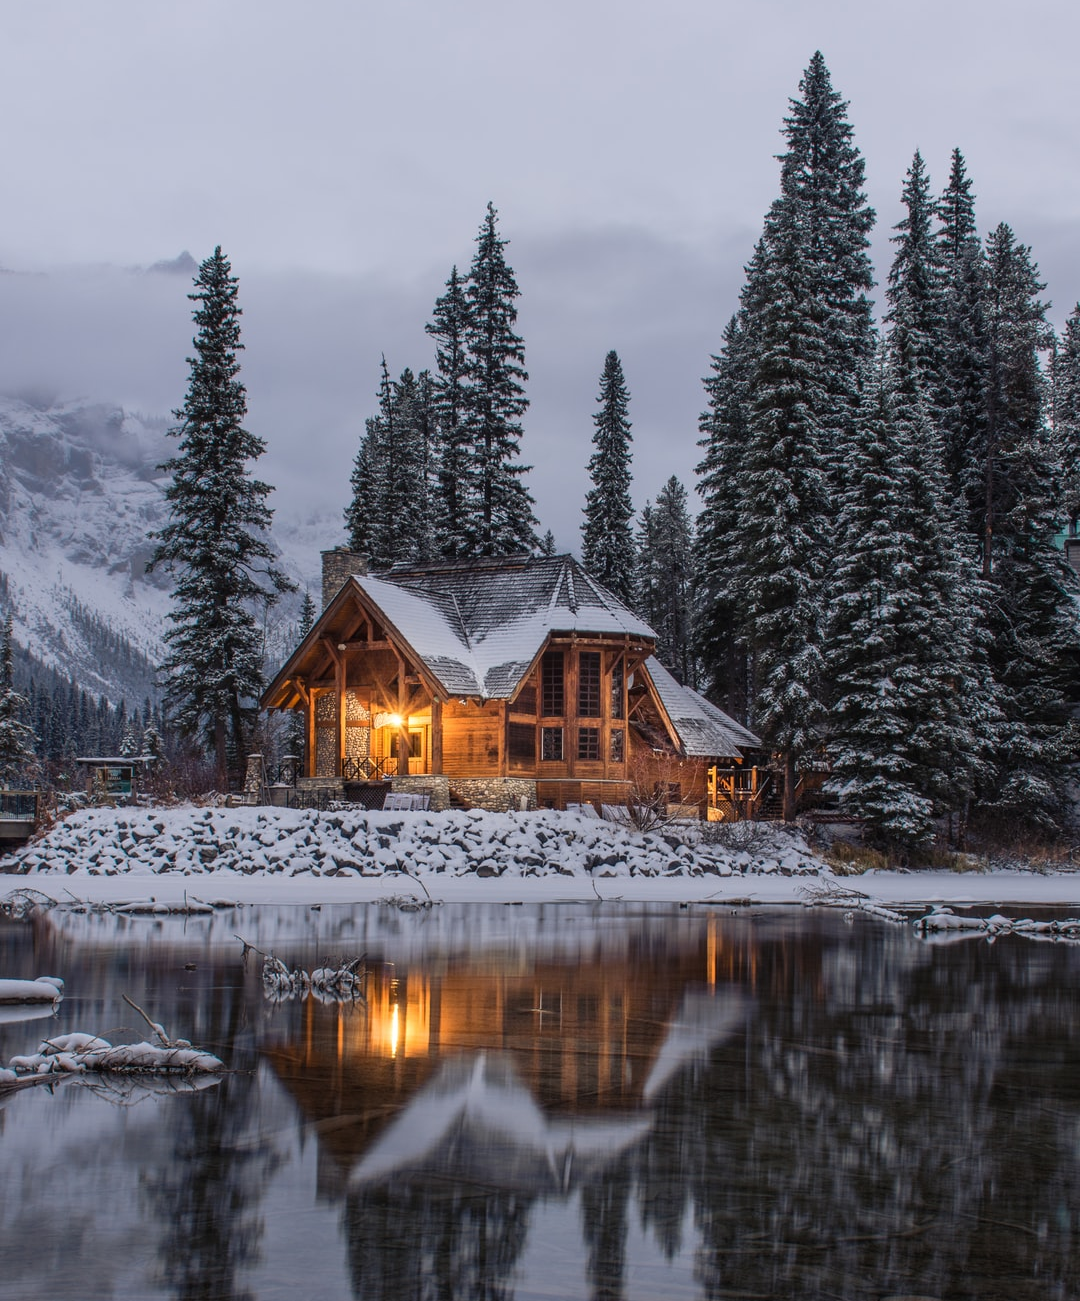 Snowy house beside Emerald lake Canada. Happy holidays everyone